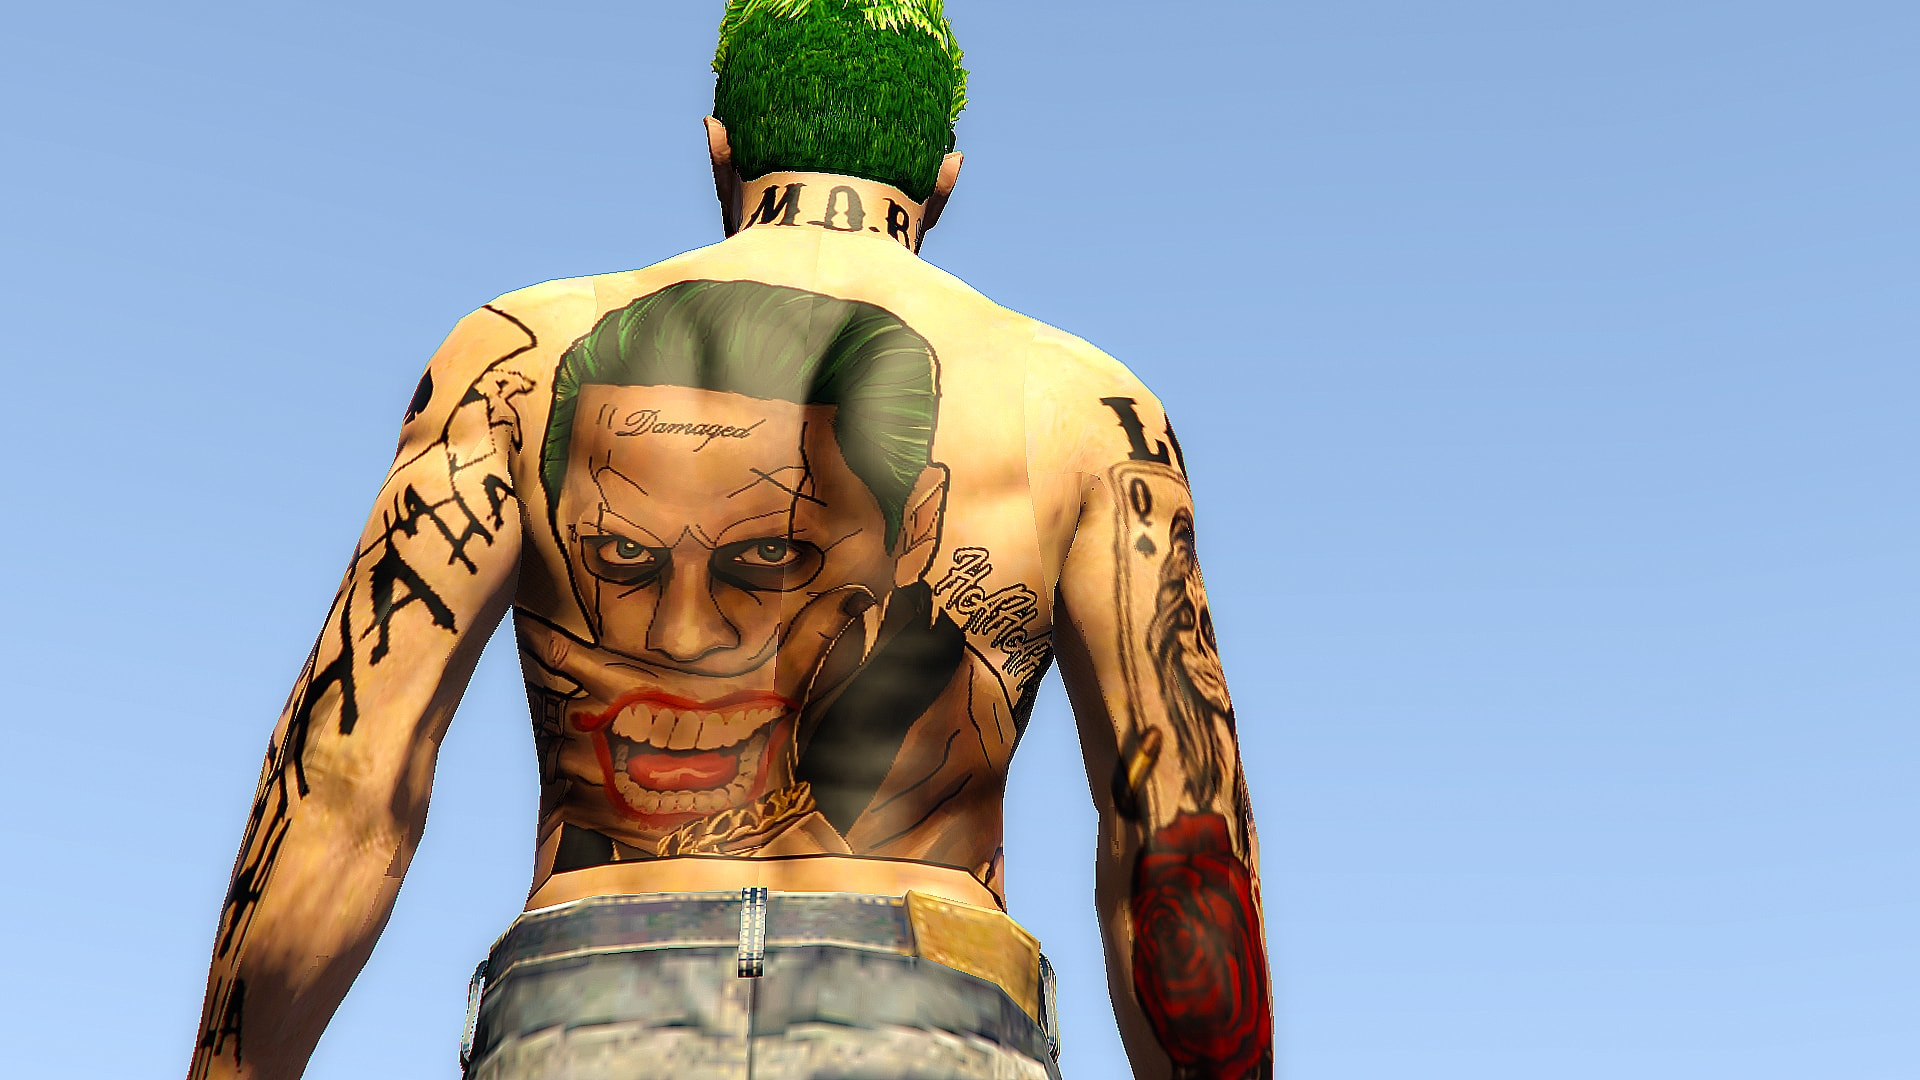 Custom Suicide Squad JOKER Art Tattoo For MP Male Back - GTA5-Mods.com